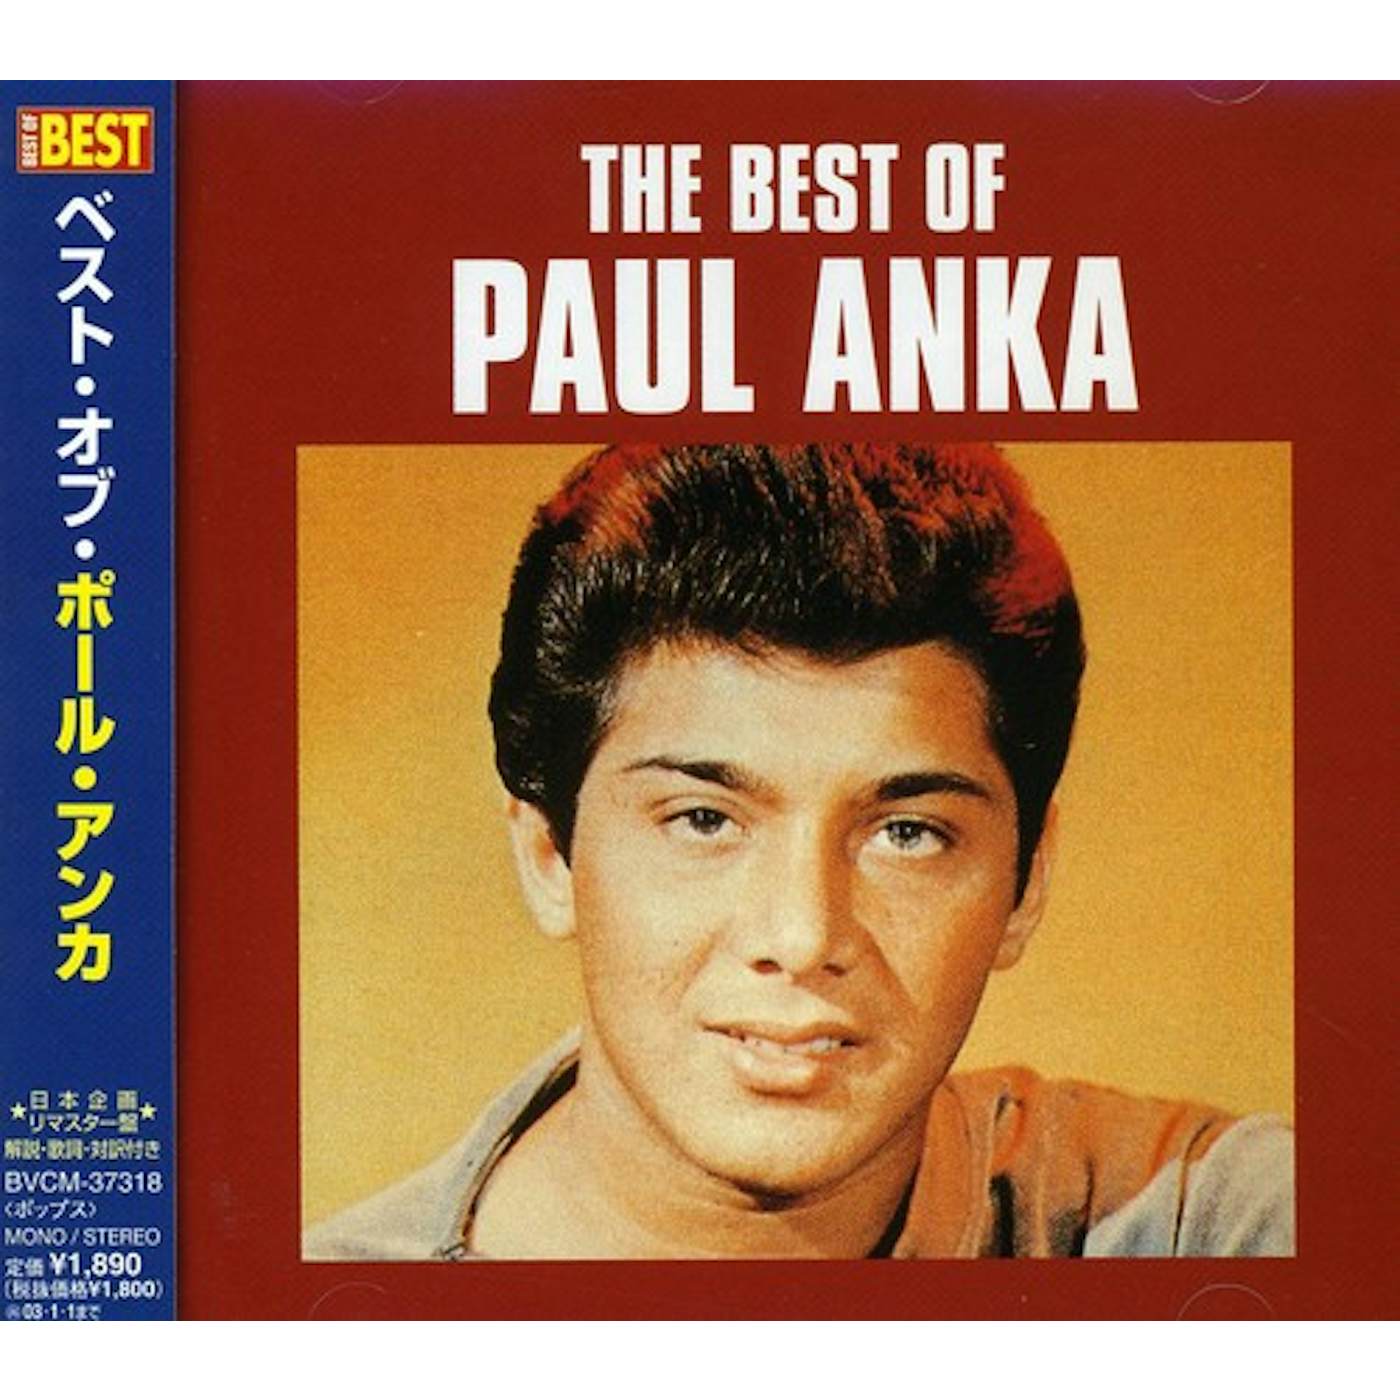 Paul Anka BEST CD